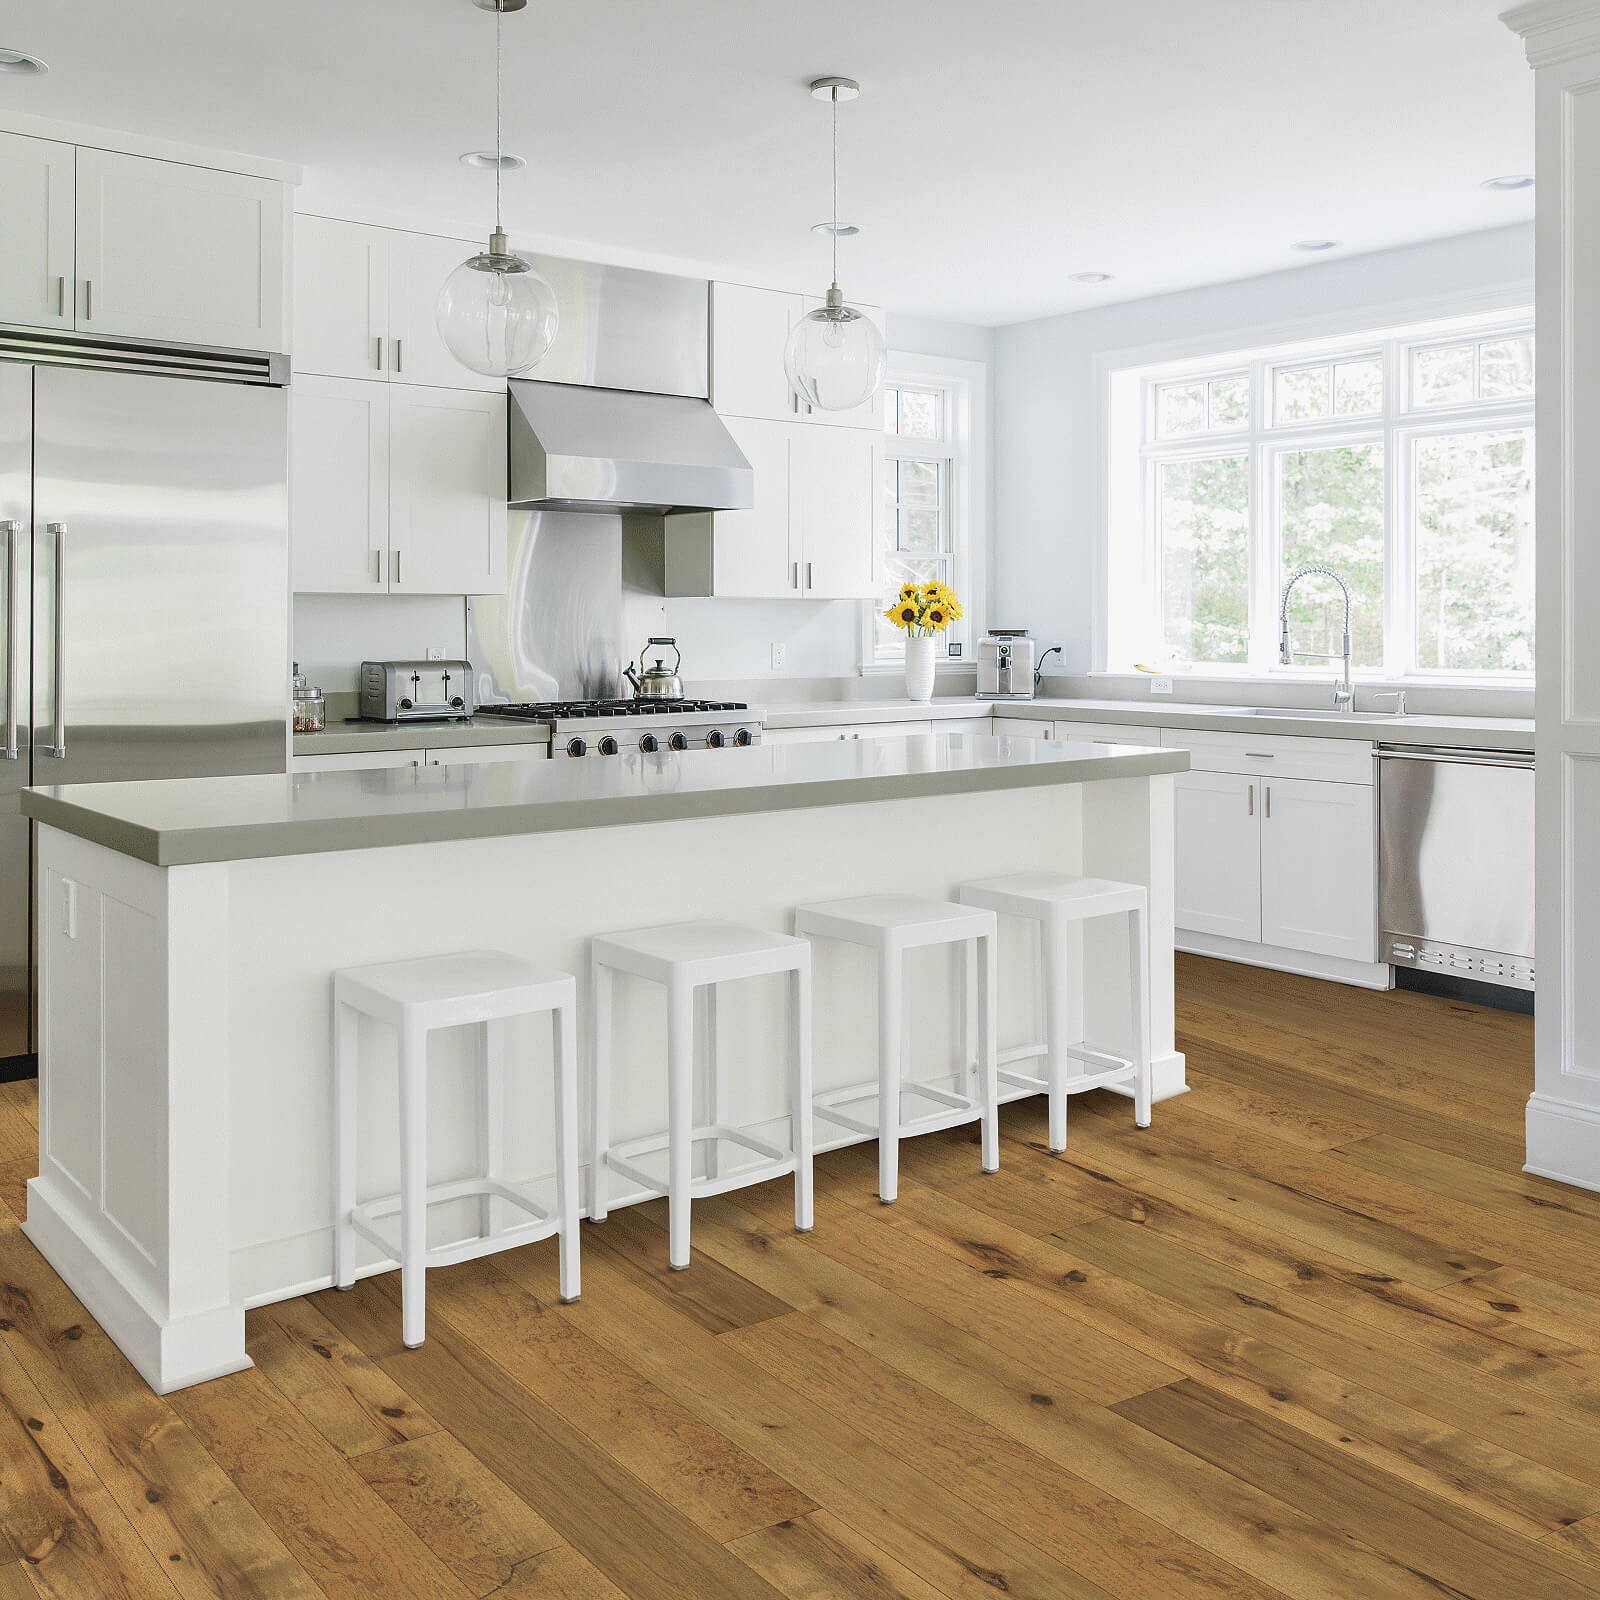 Hardwood flooring in kitchen | Dehart Tile